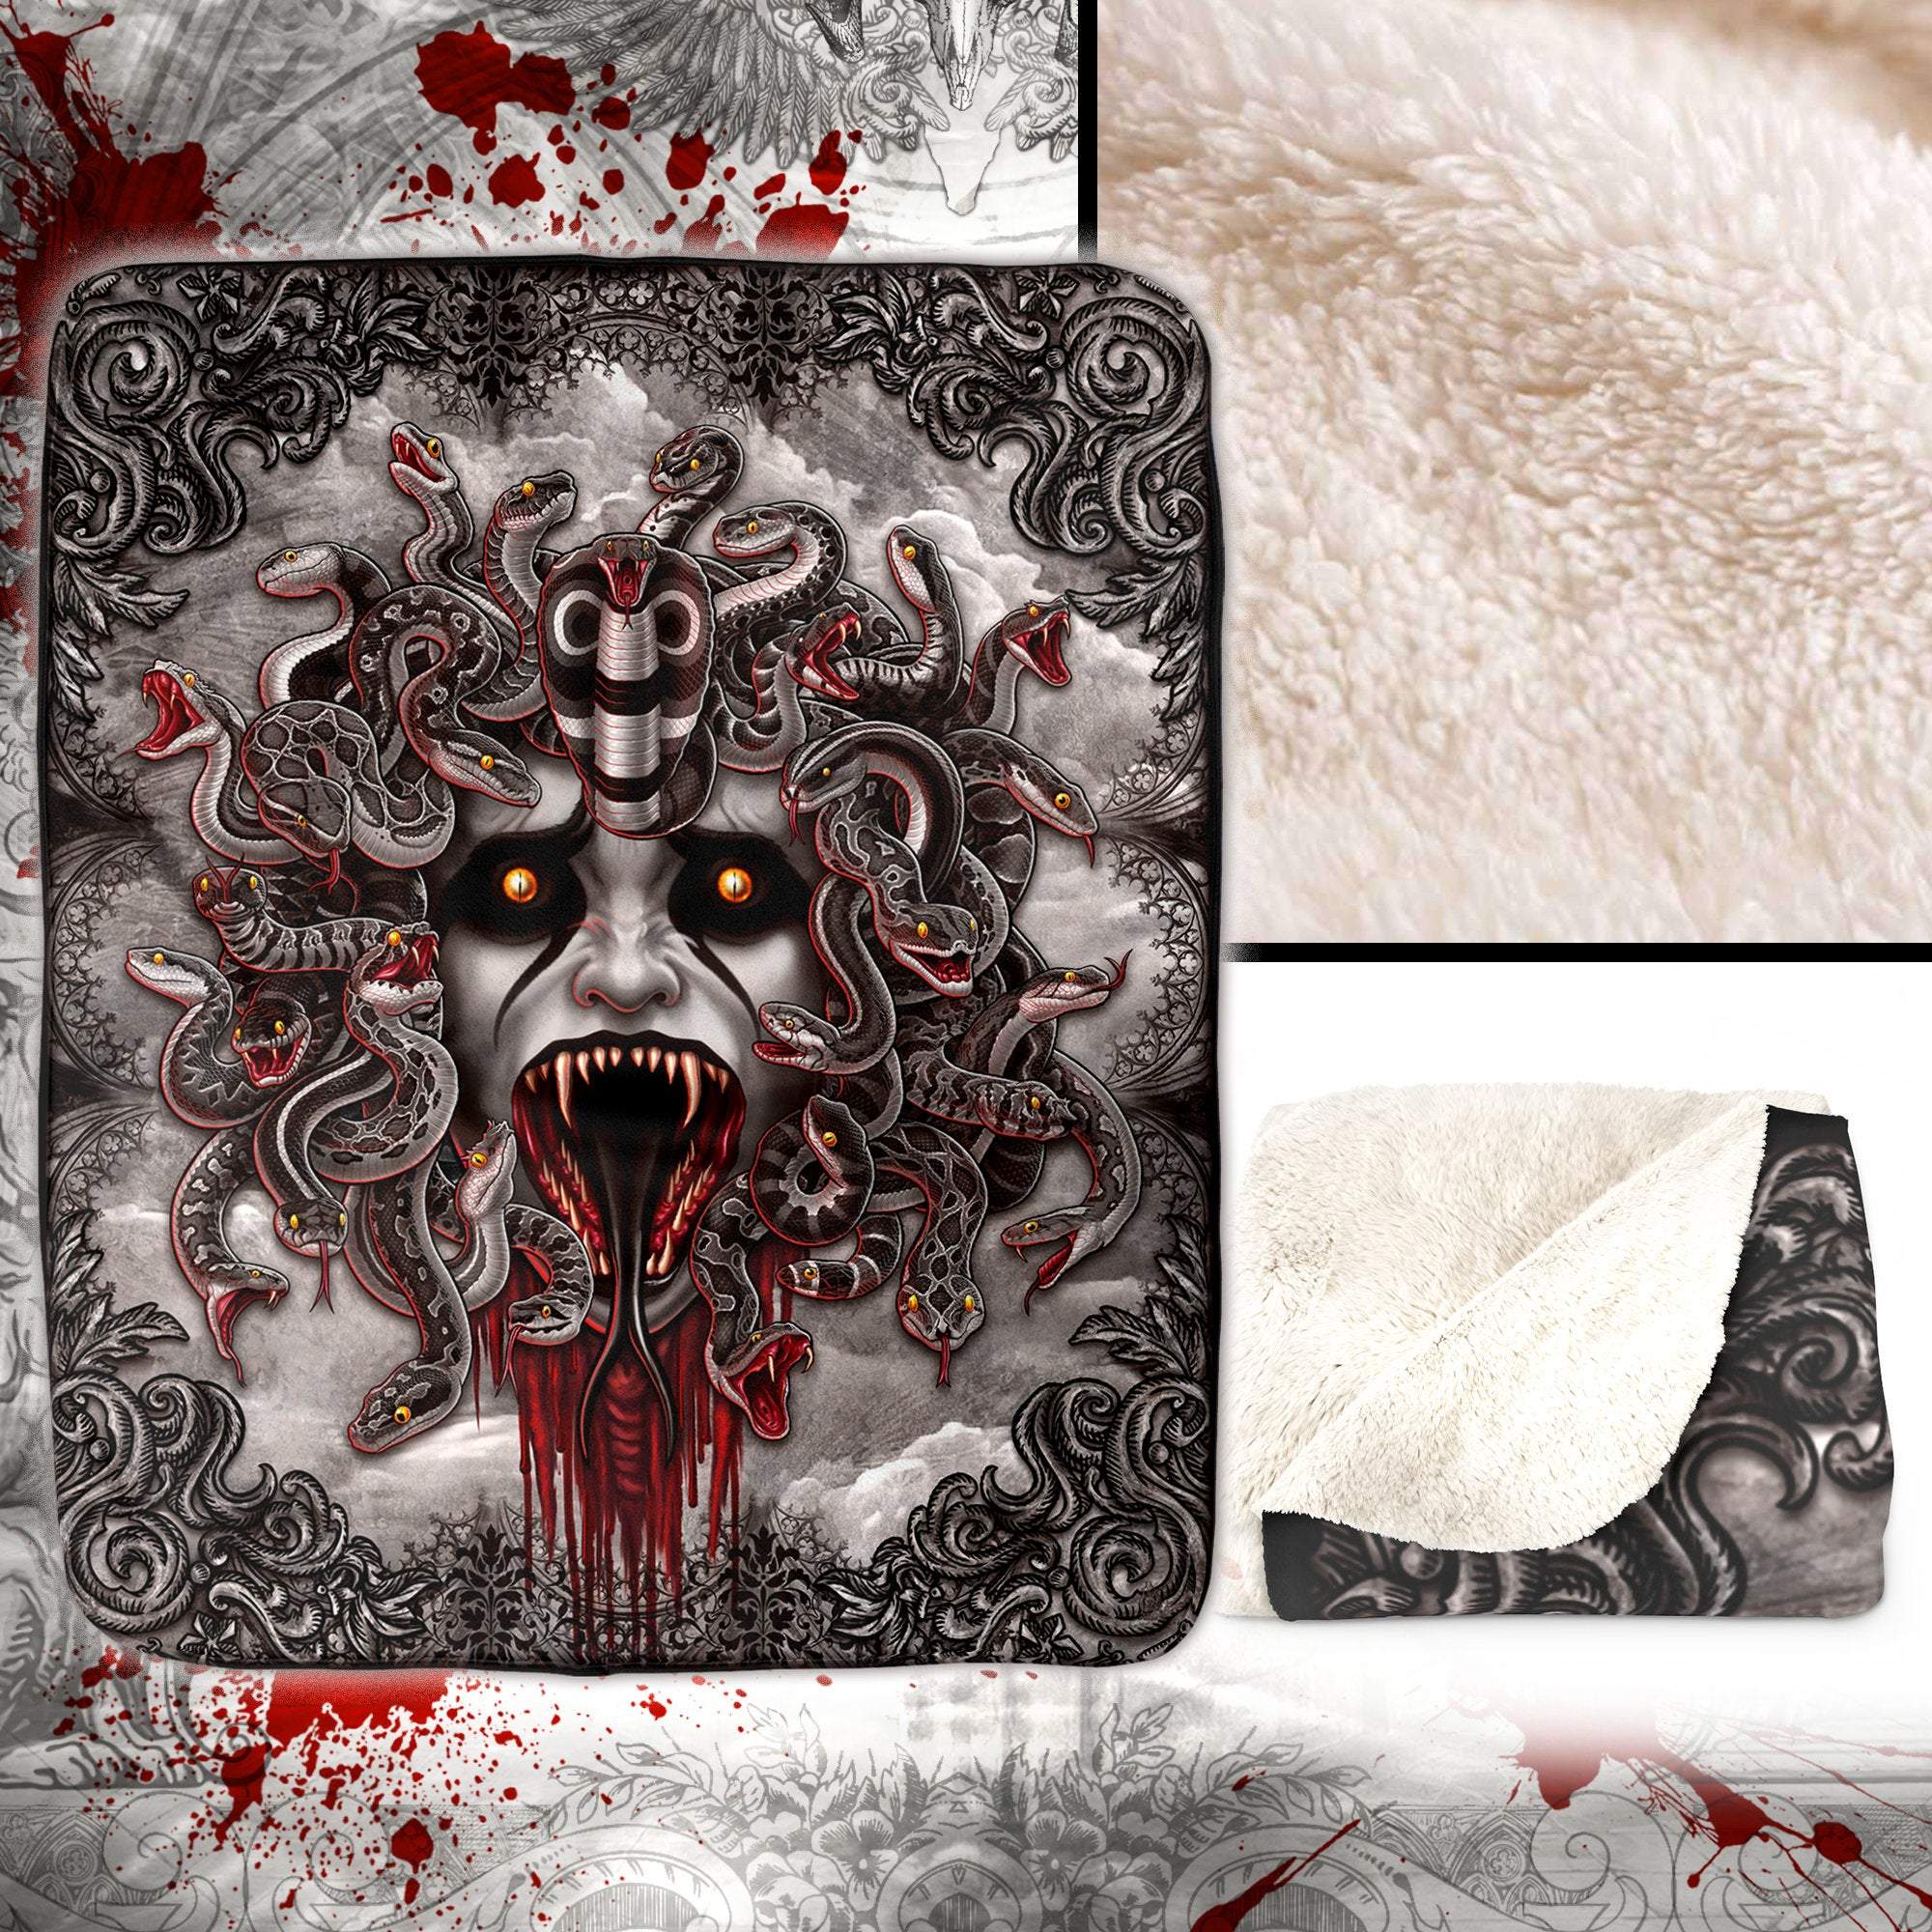 Medusa Throw Fleece Blanket, Gothic Home Decor, Alternative Art Gift - Screaming, Grey Snakes - Abysm Internal